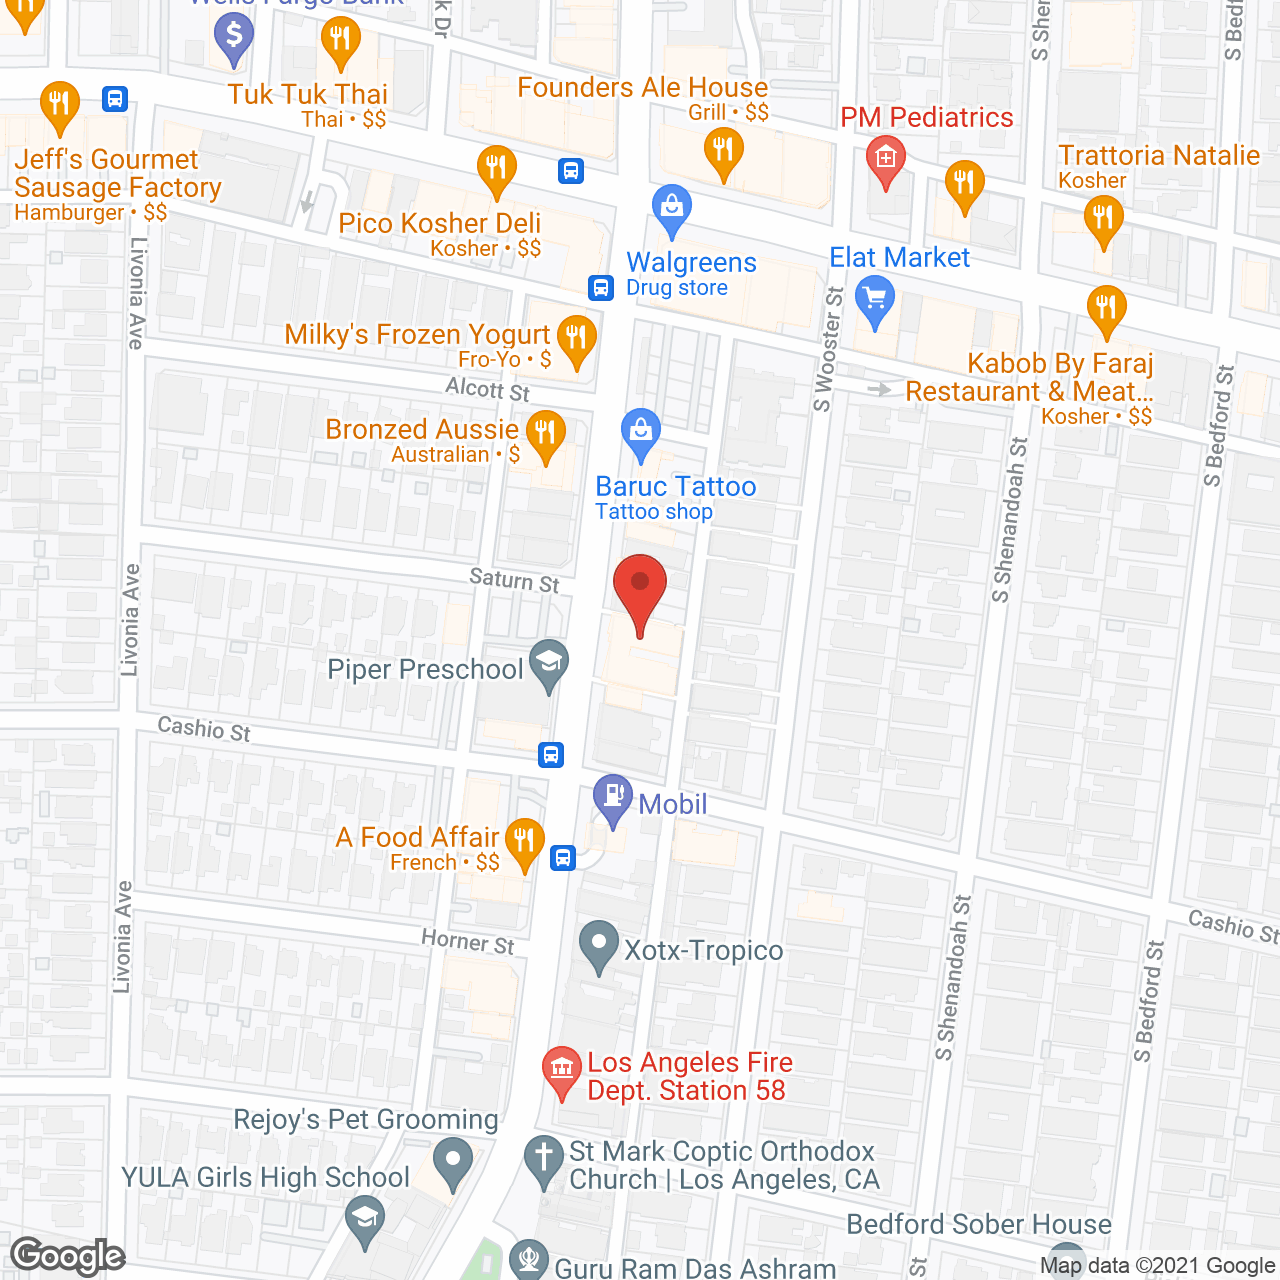 Beverly Hills Gardens in google map